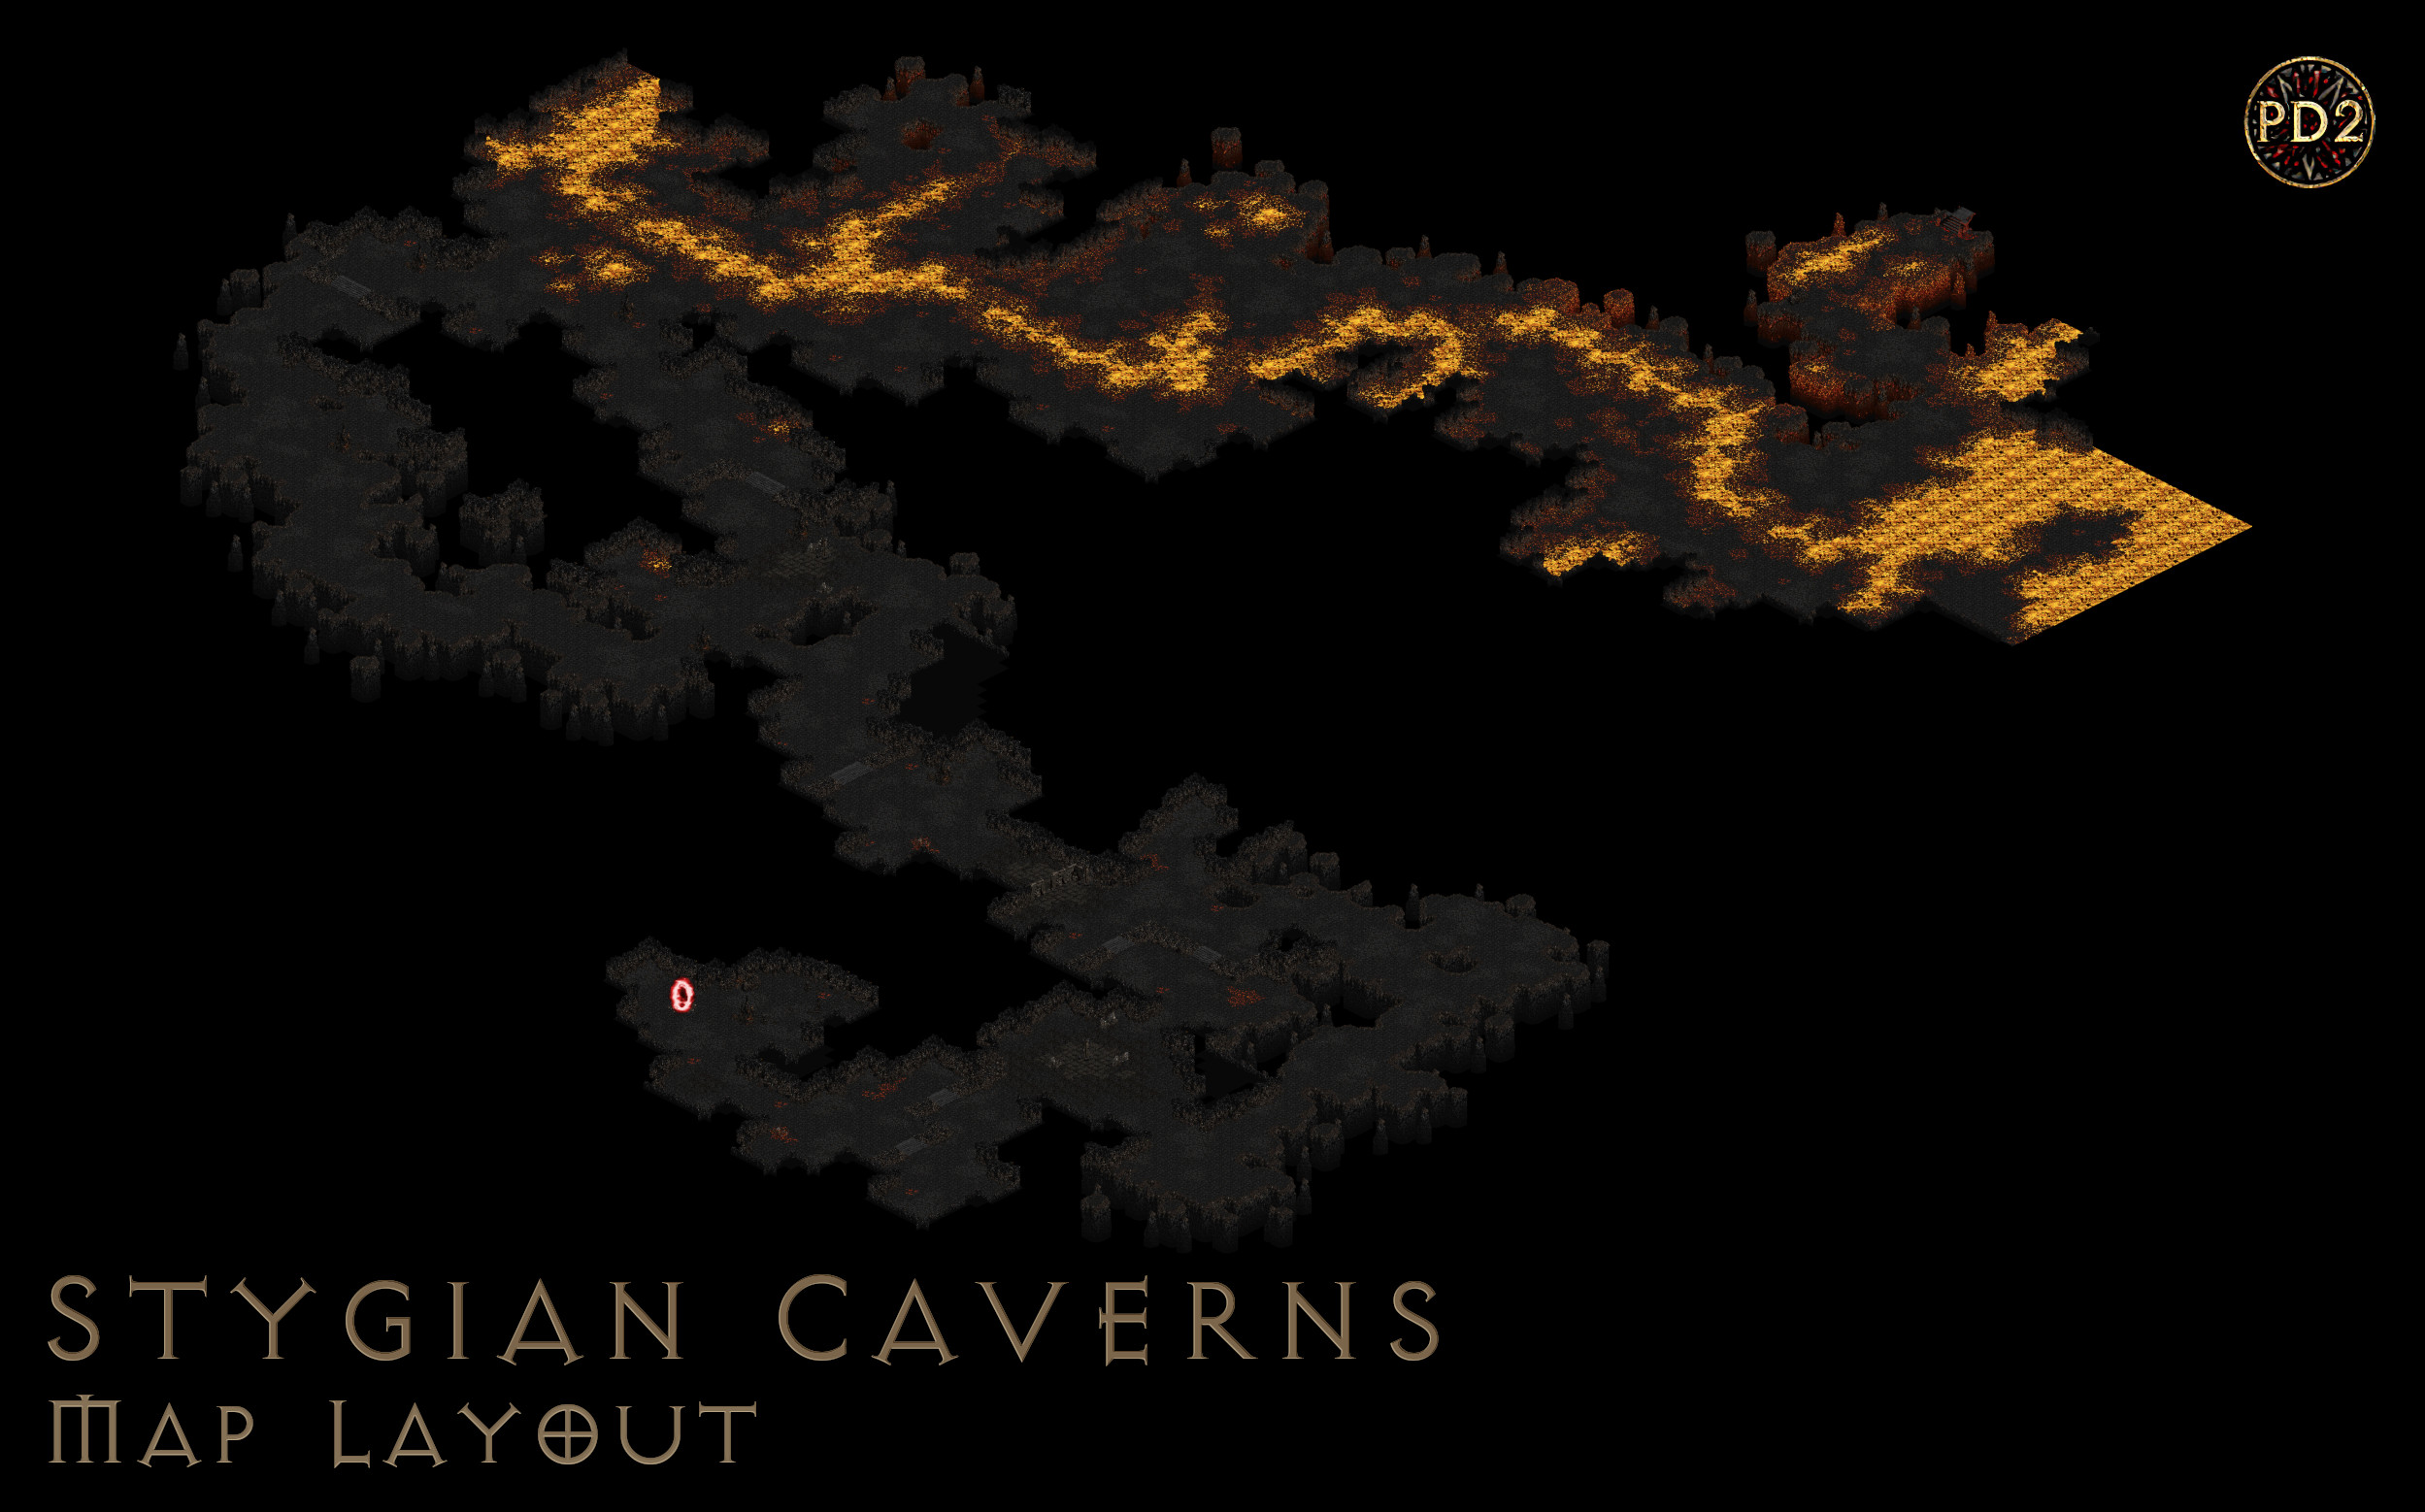 Stygian-caverns.jpg